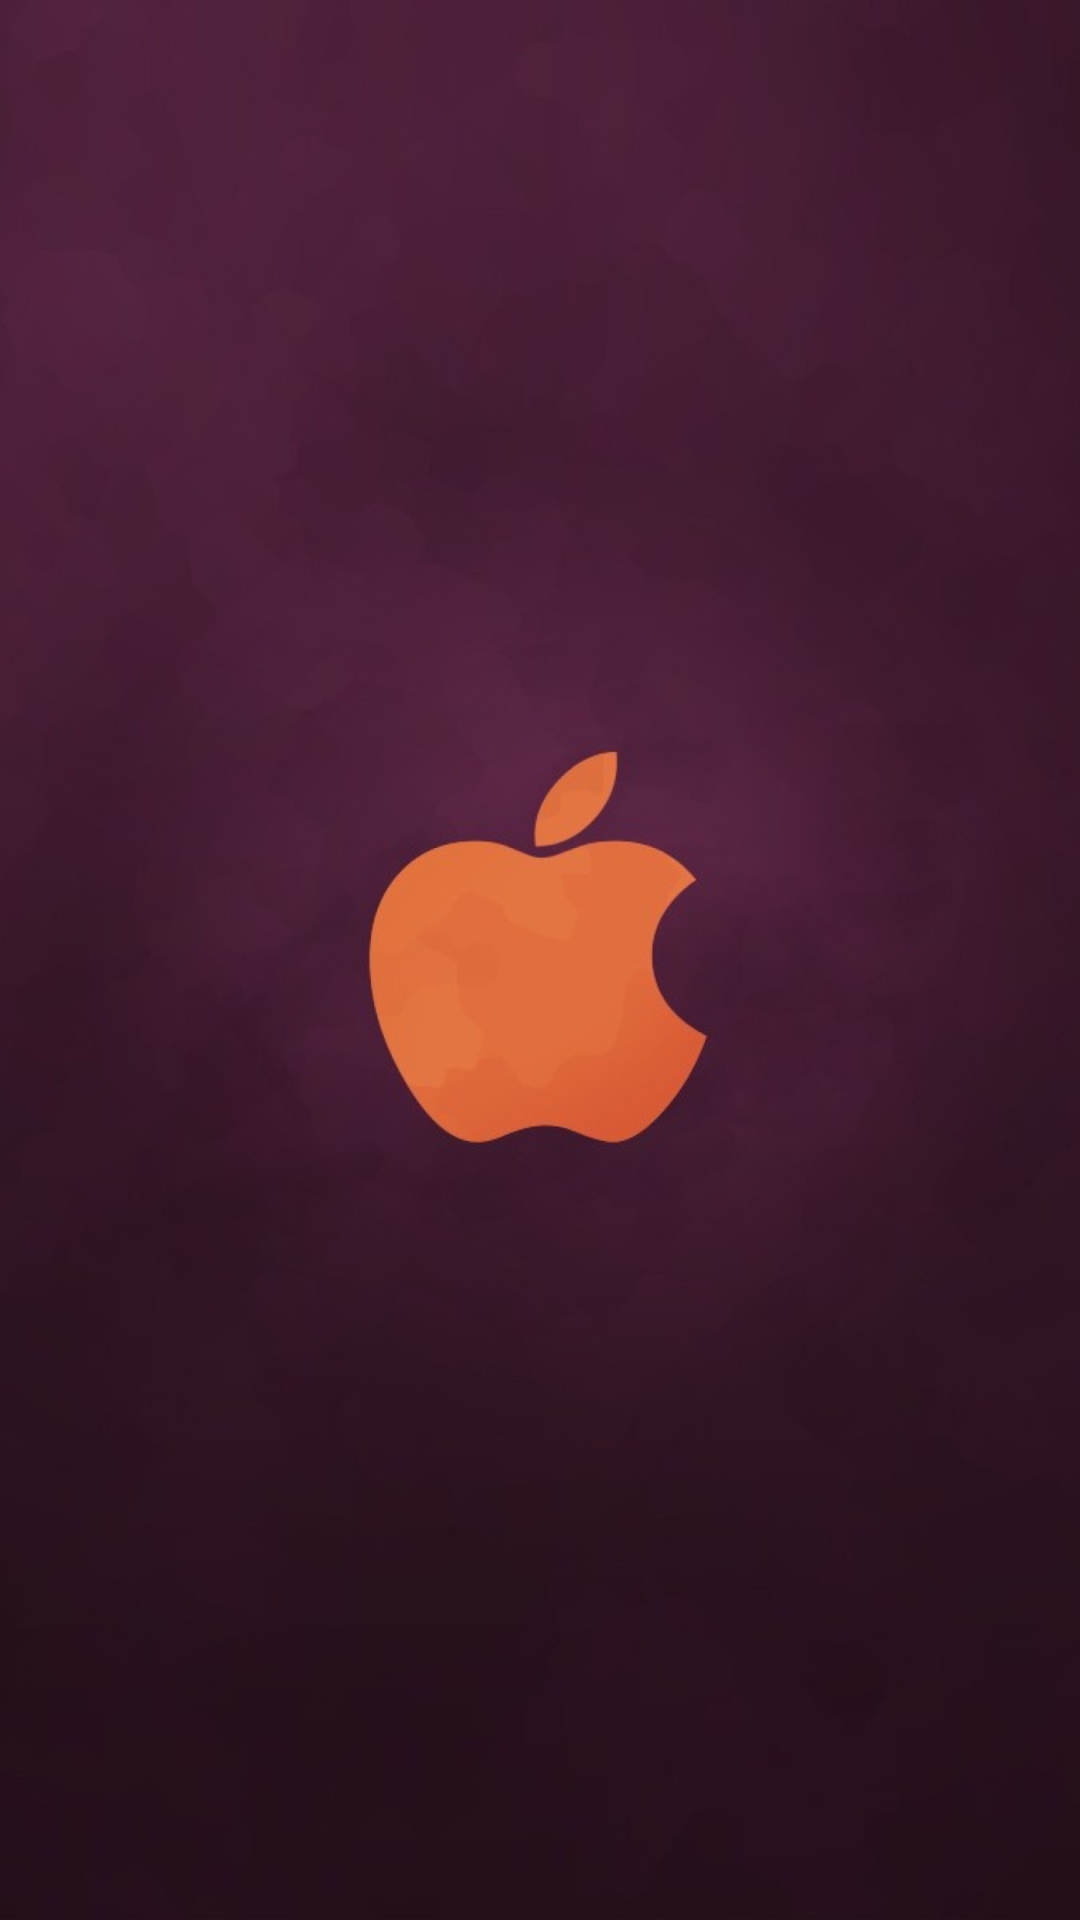 Apple Logo Wallpaper for iPhone 7 Plus